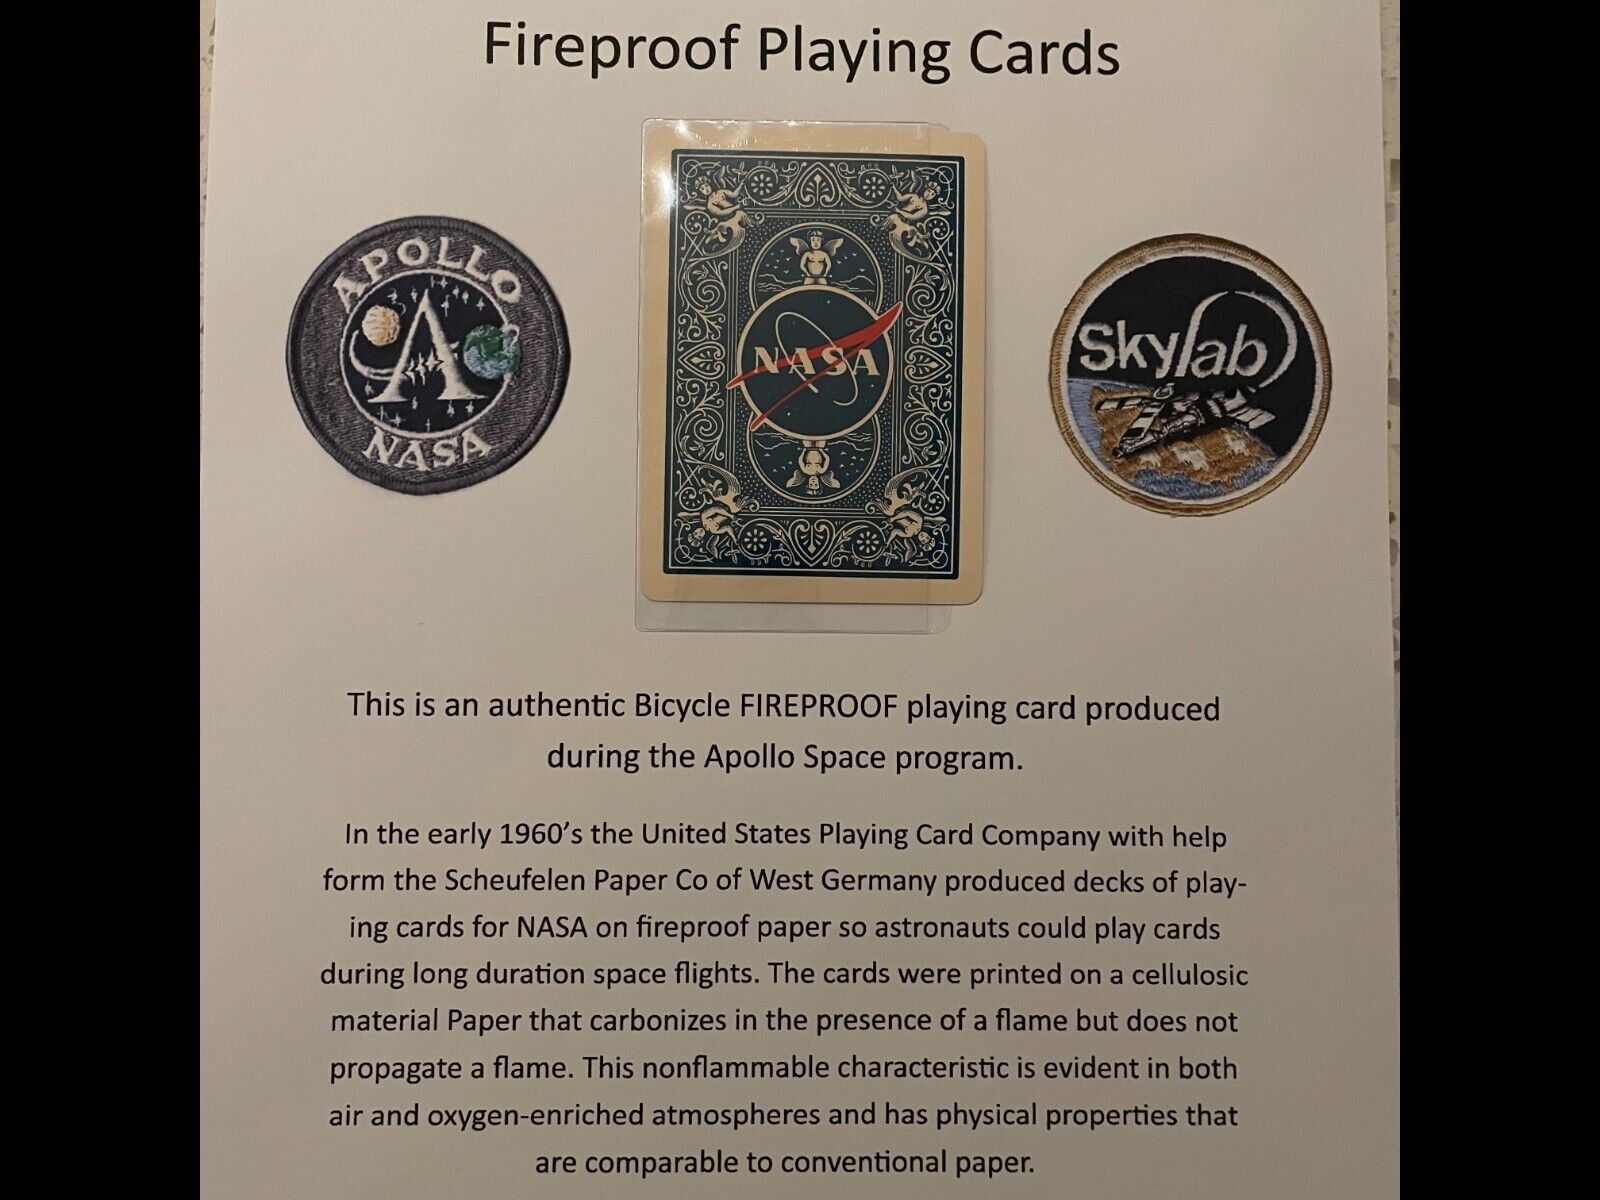 Apollo era Fireproof Playing Card from NASA